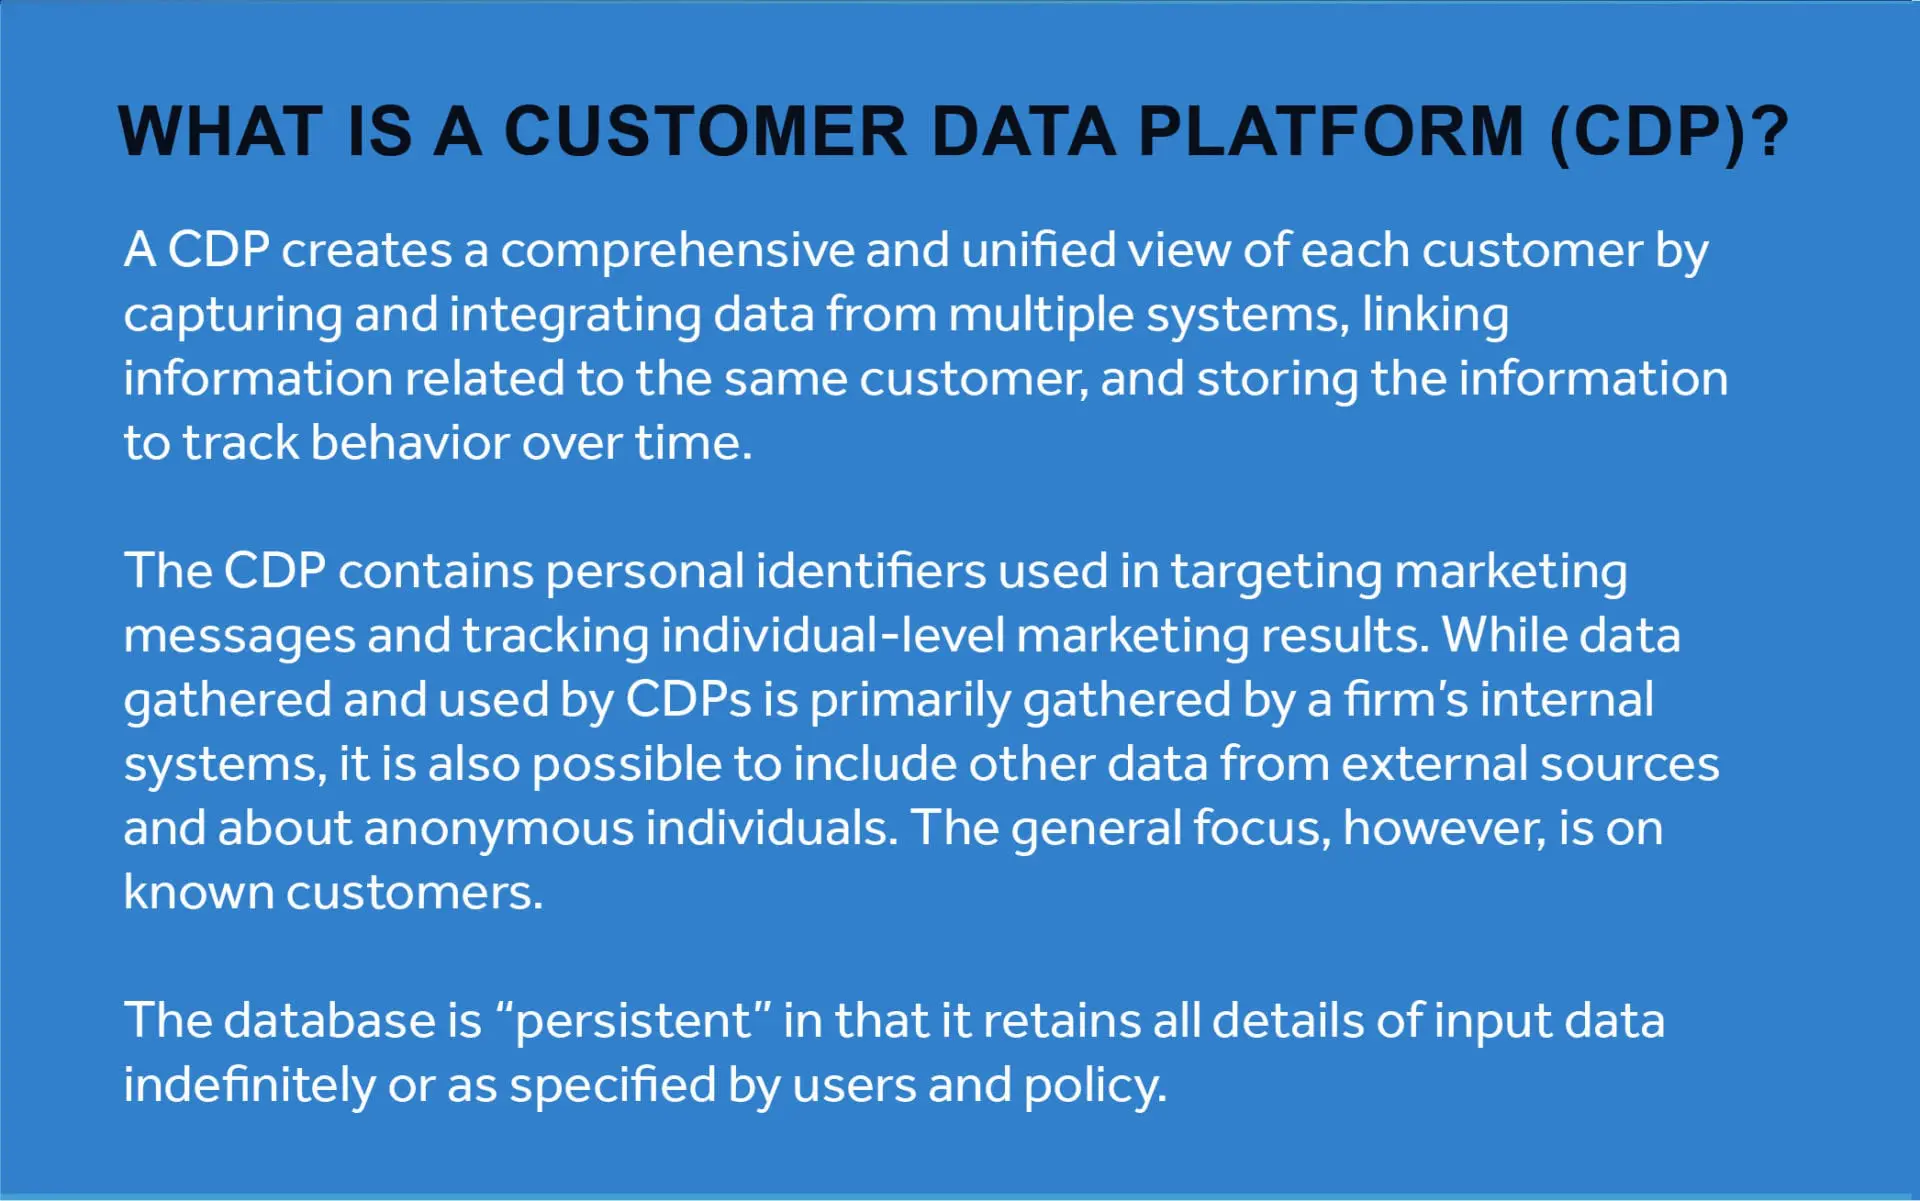 An explanation of a customer data platform